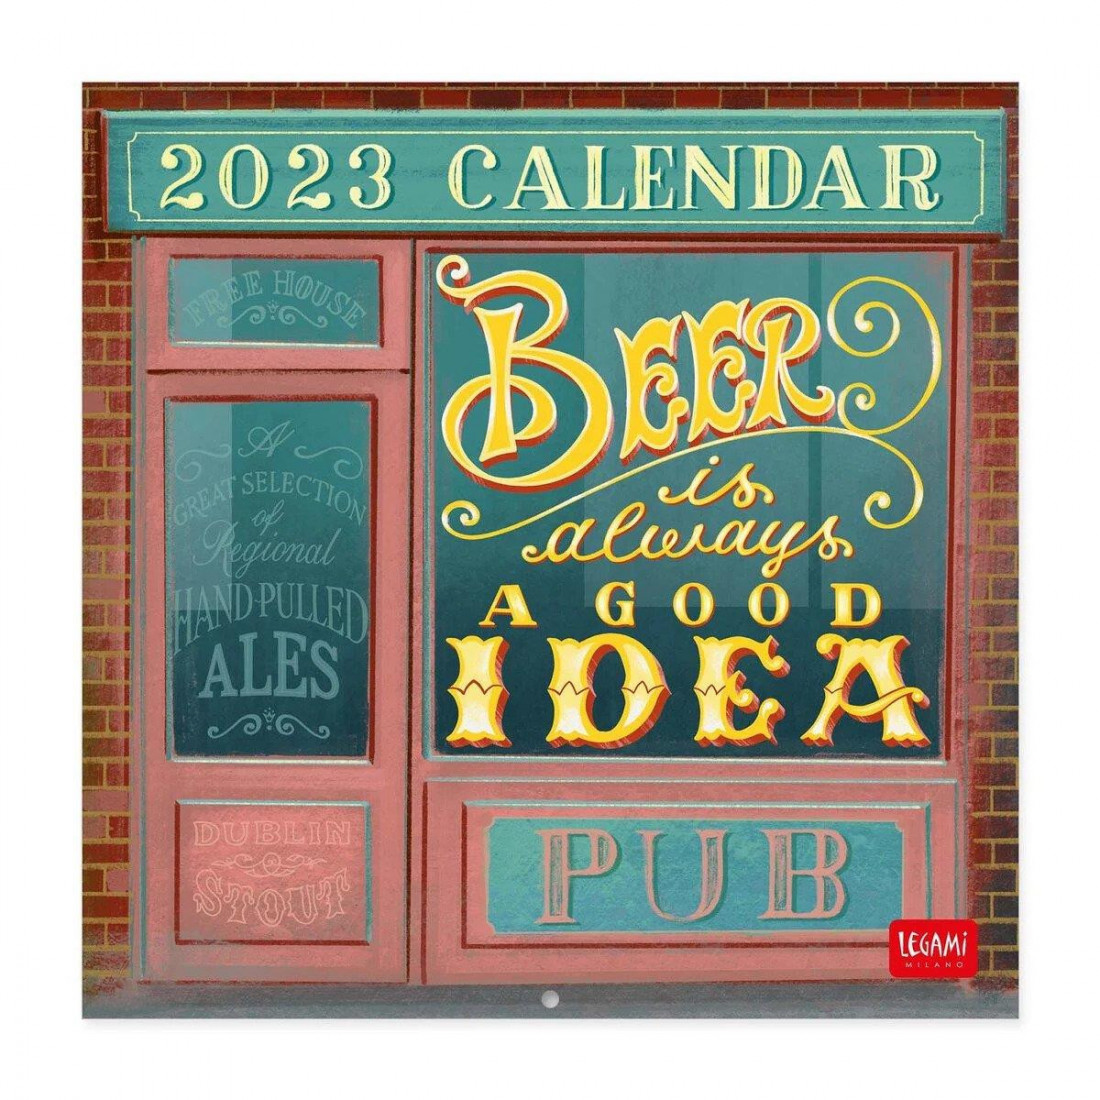 Legami Wall Calendar 2023 Beer is always a good idea 18 x 18 cm